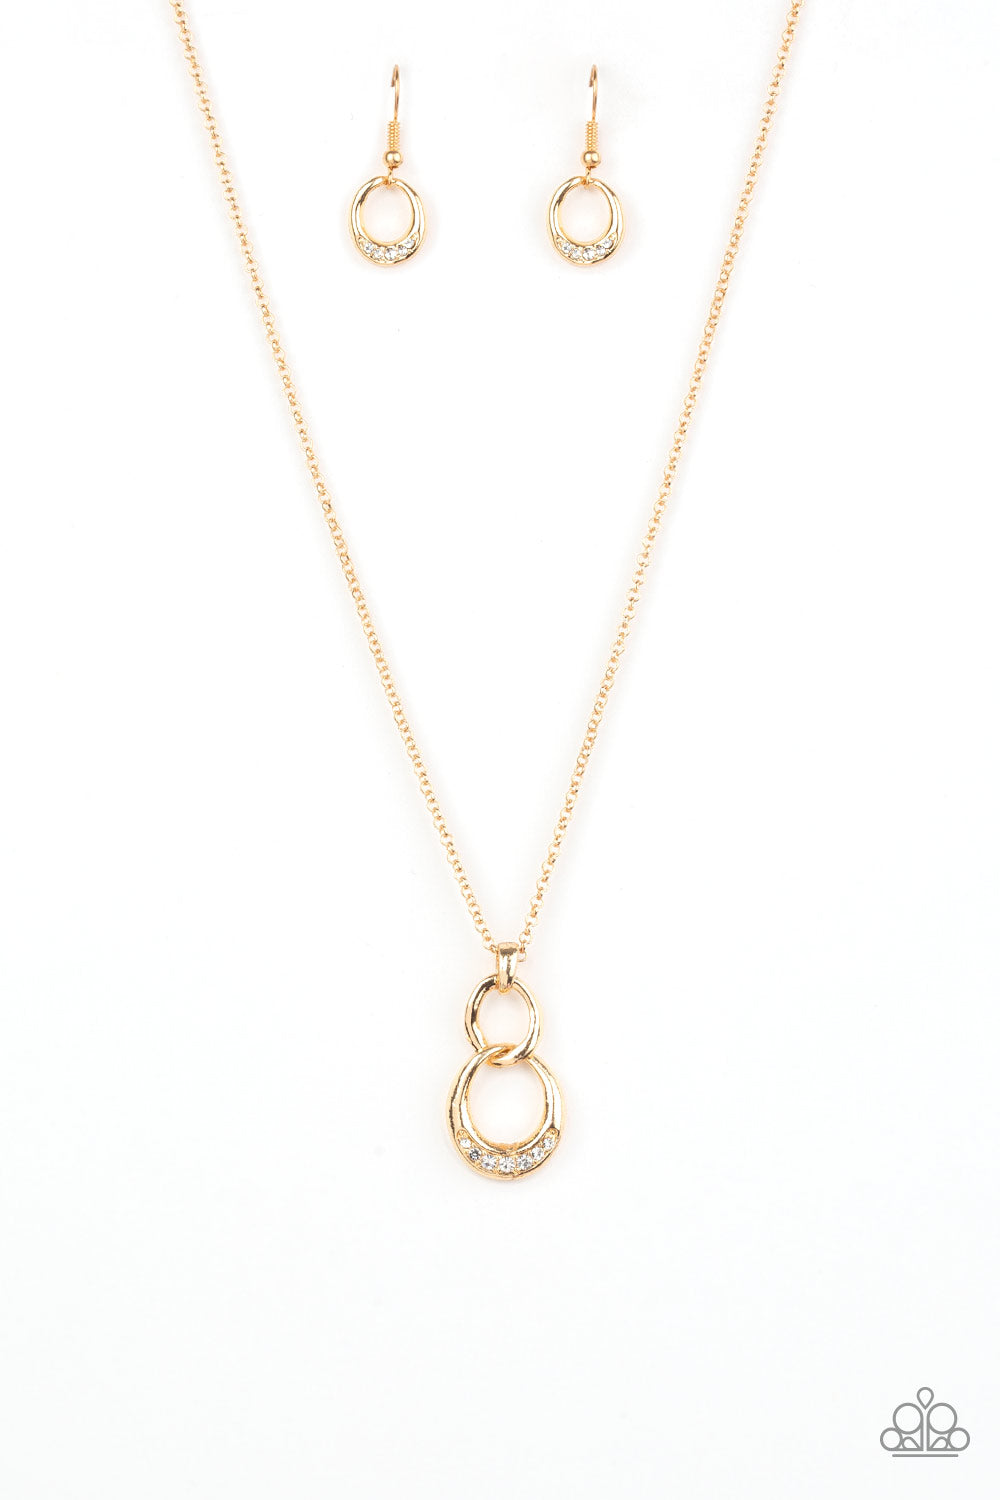 Paparazzi Accessories - Rockefeller Royal - Gold Necklace